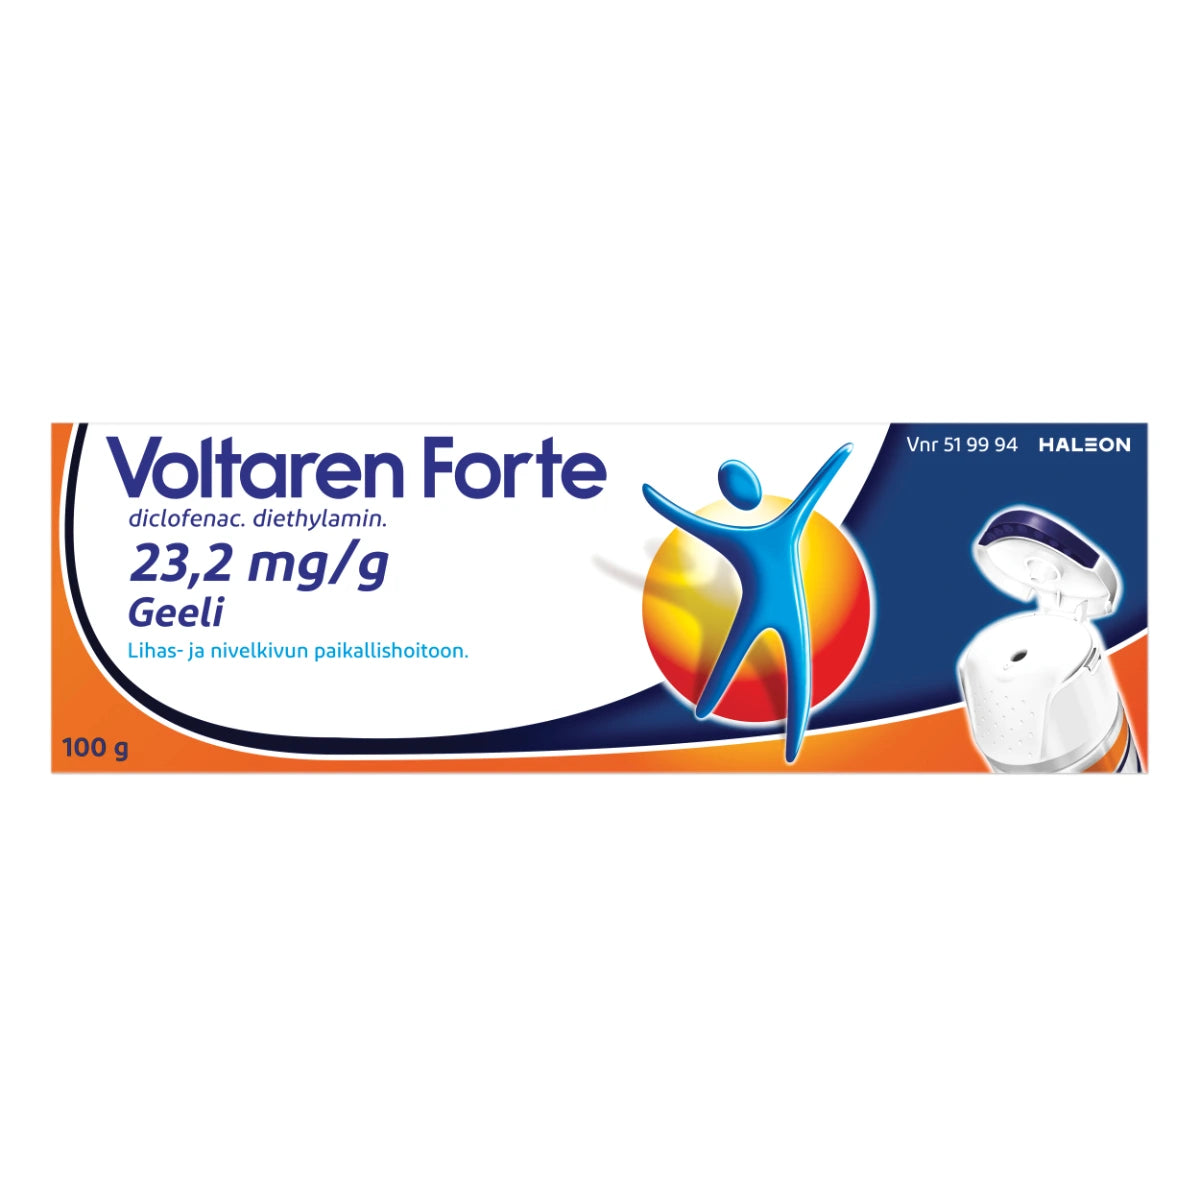 VOLTAREN FORTE 23,2 mg/g geeli 100 g lihas- ja nivelkipuun